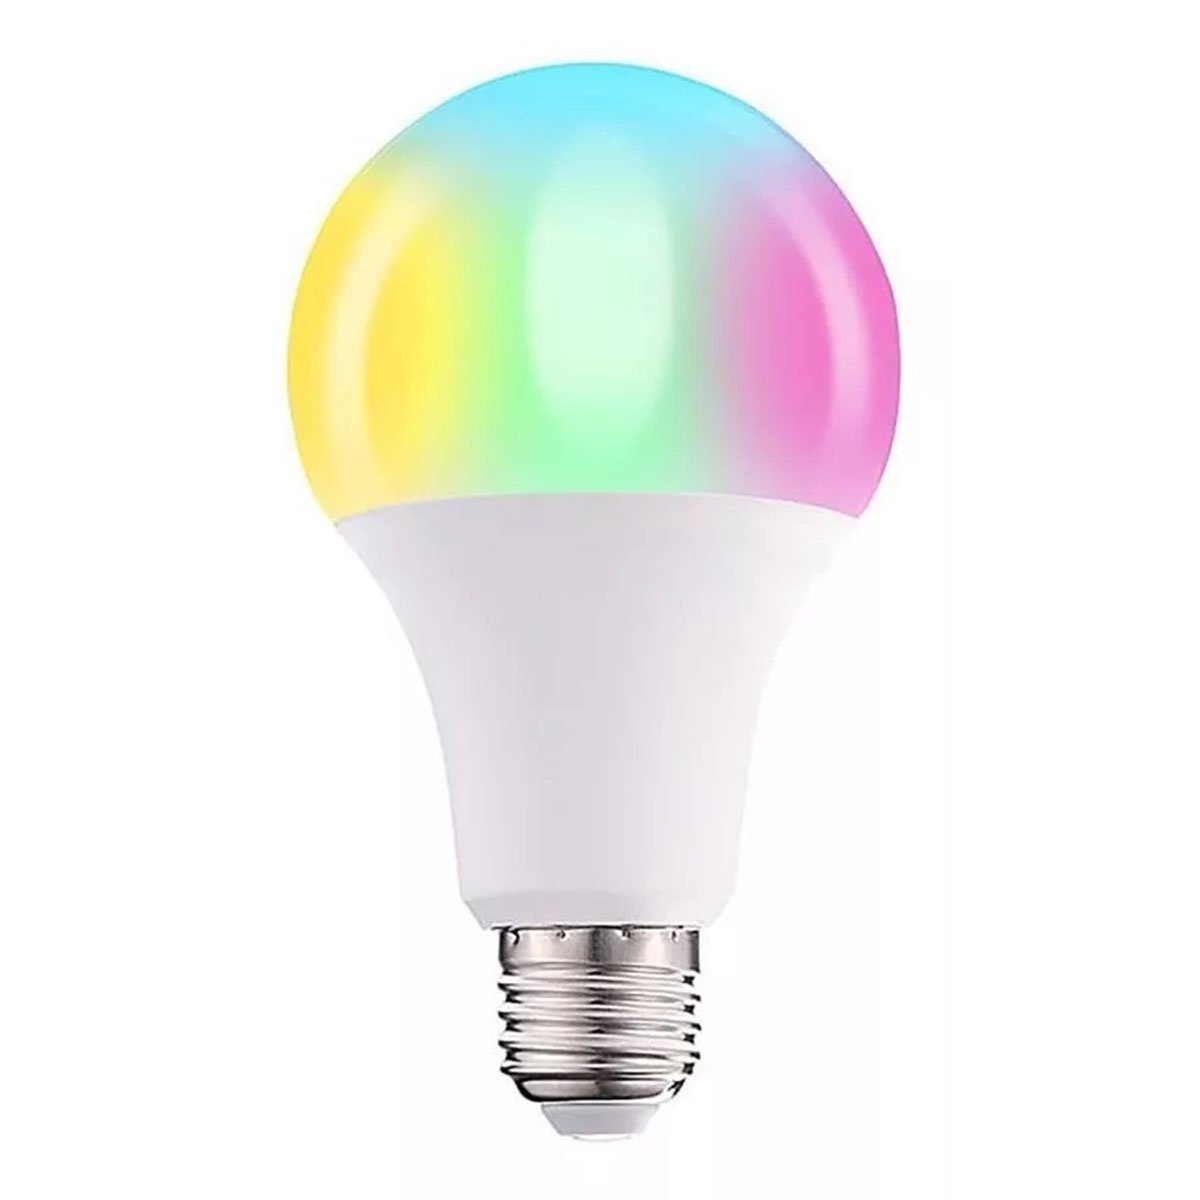 Lampada Led Bulbo 16 Cores RGB 9W Colorida Controle Remoto Luzes Decoraçao E27 Luminaria Abajur Casa - 5